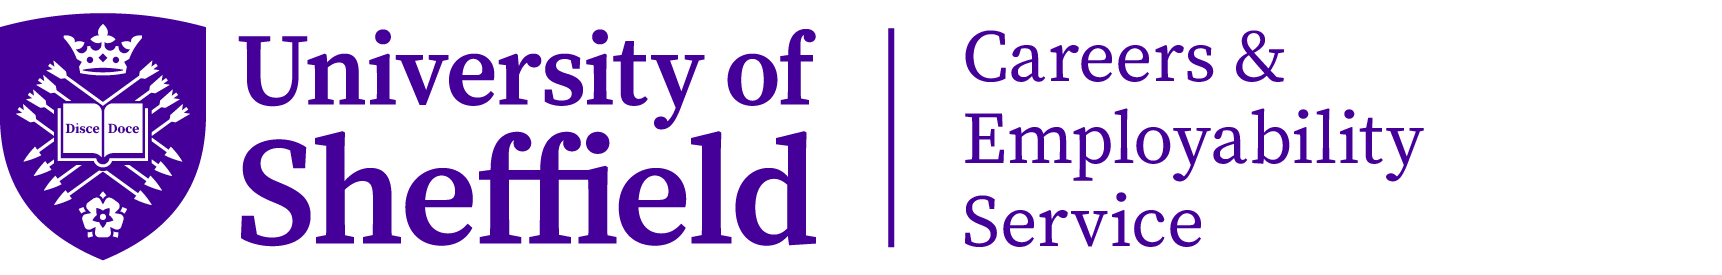 UoS Careers and Employability Service logo